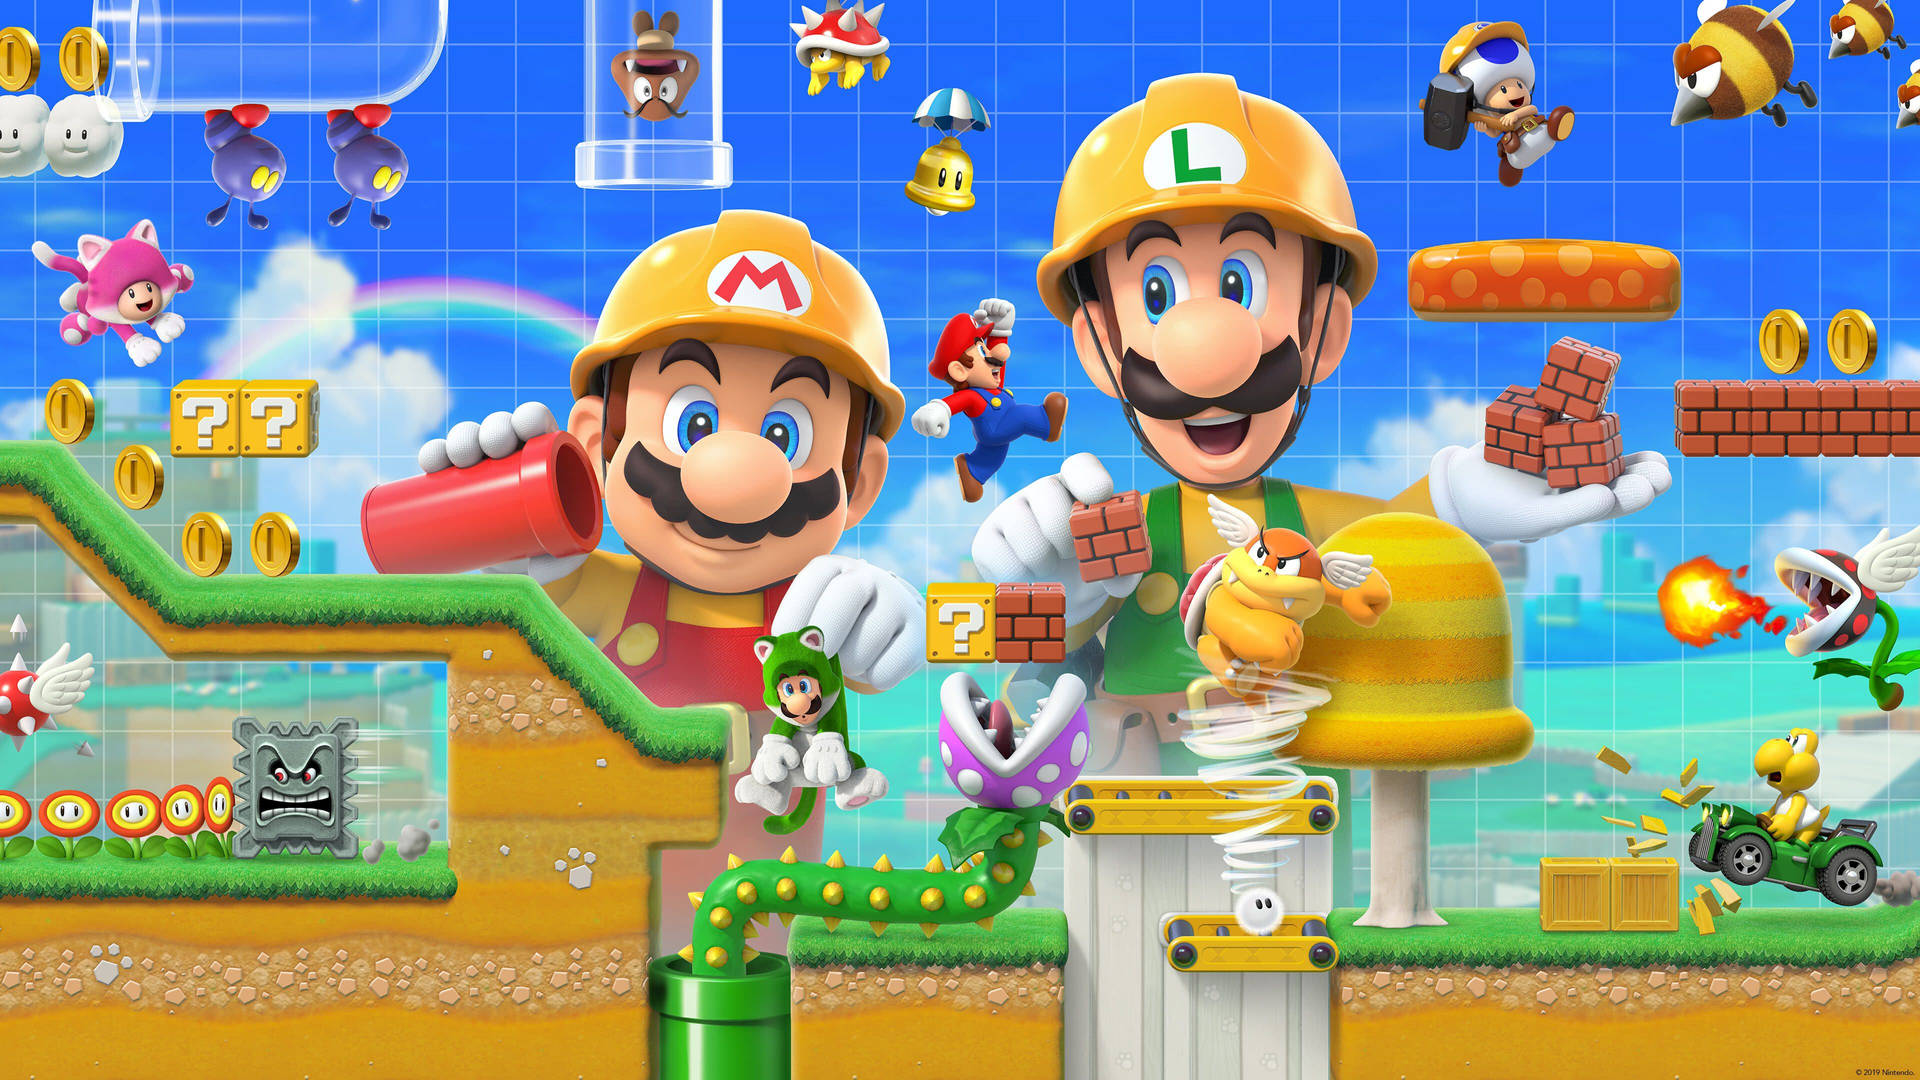 Super Mario Maker With Luigi Background